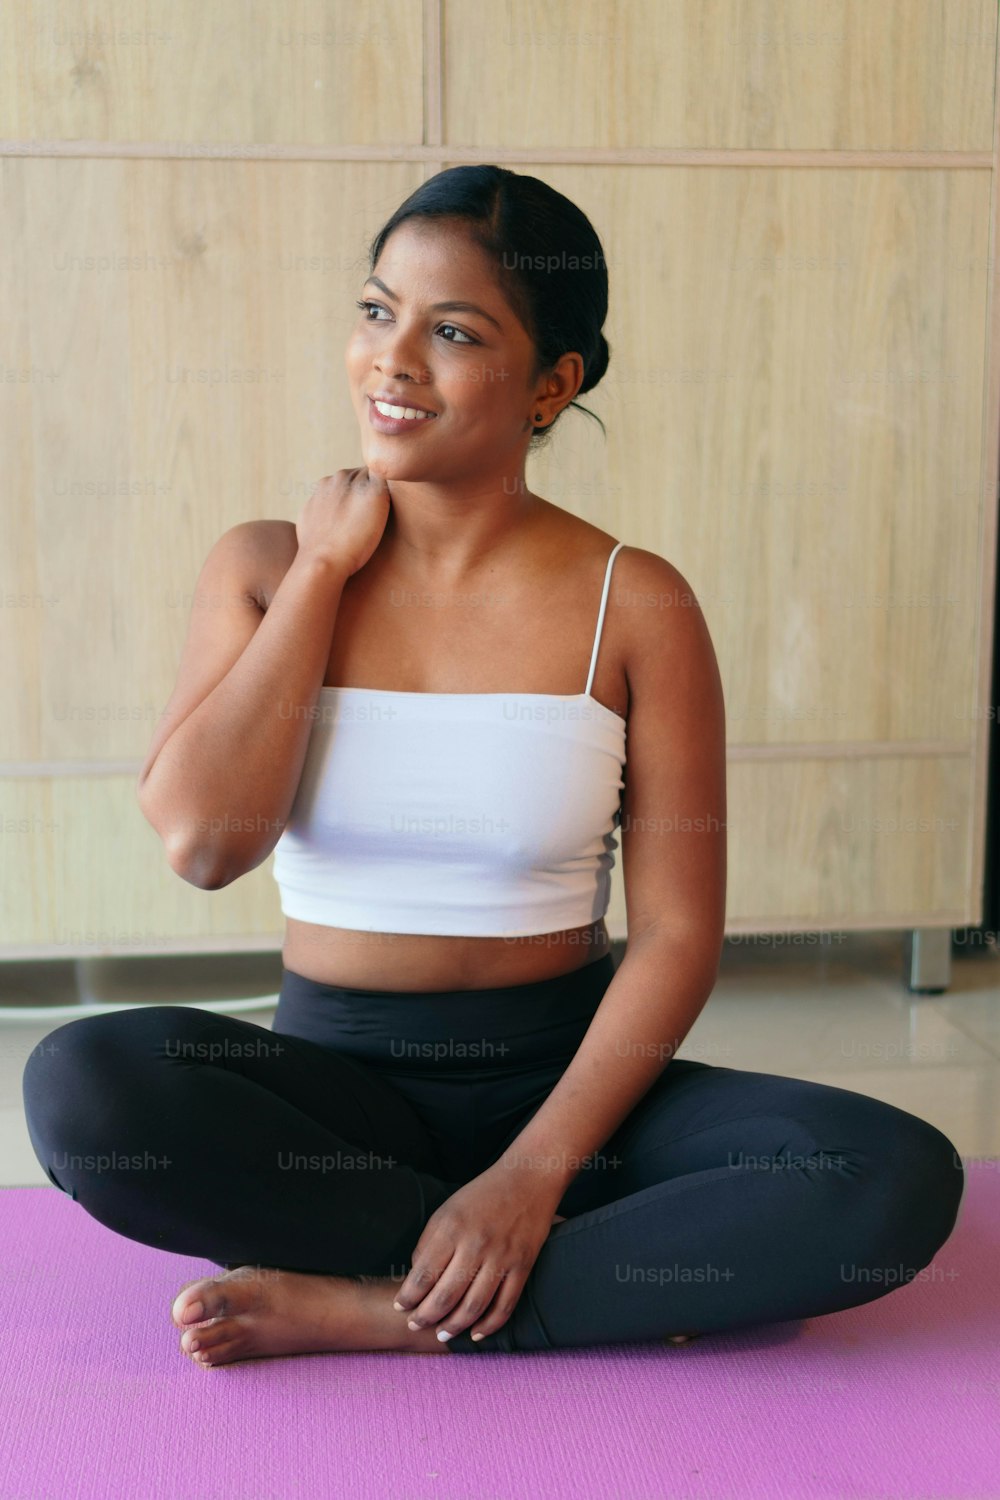 Black Woman practicing yoga, exercising, wearing sportswear, black pants and top.